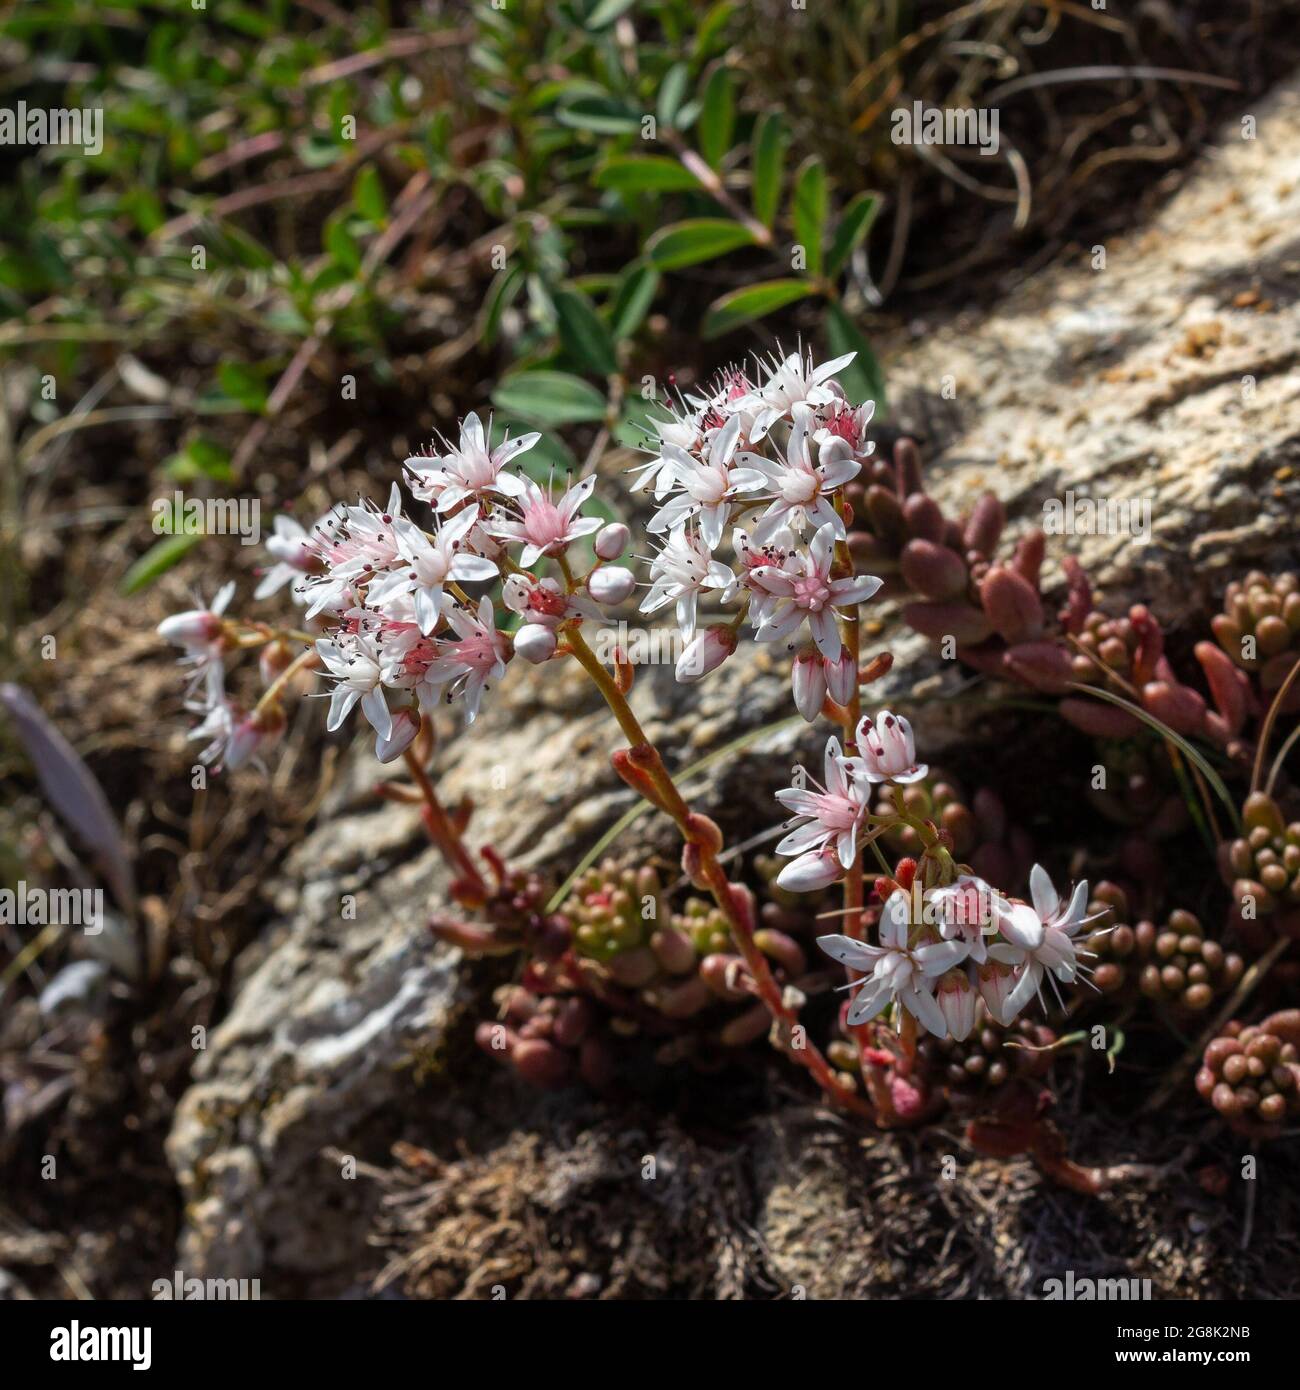 Alpine wild flower Sedum Album (White Stonecrop). Photo taken at an altitude of 2200 meters, close to the maximum altitude for this flower. Stock Photo